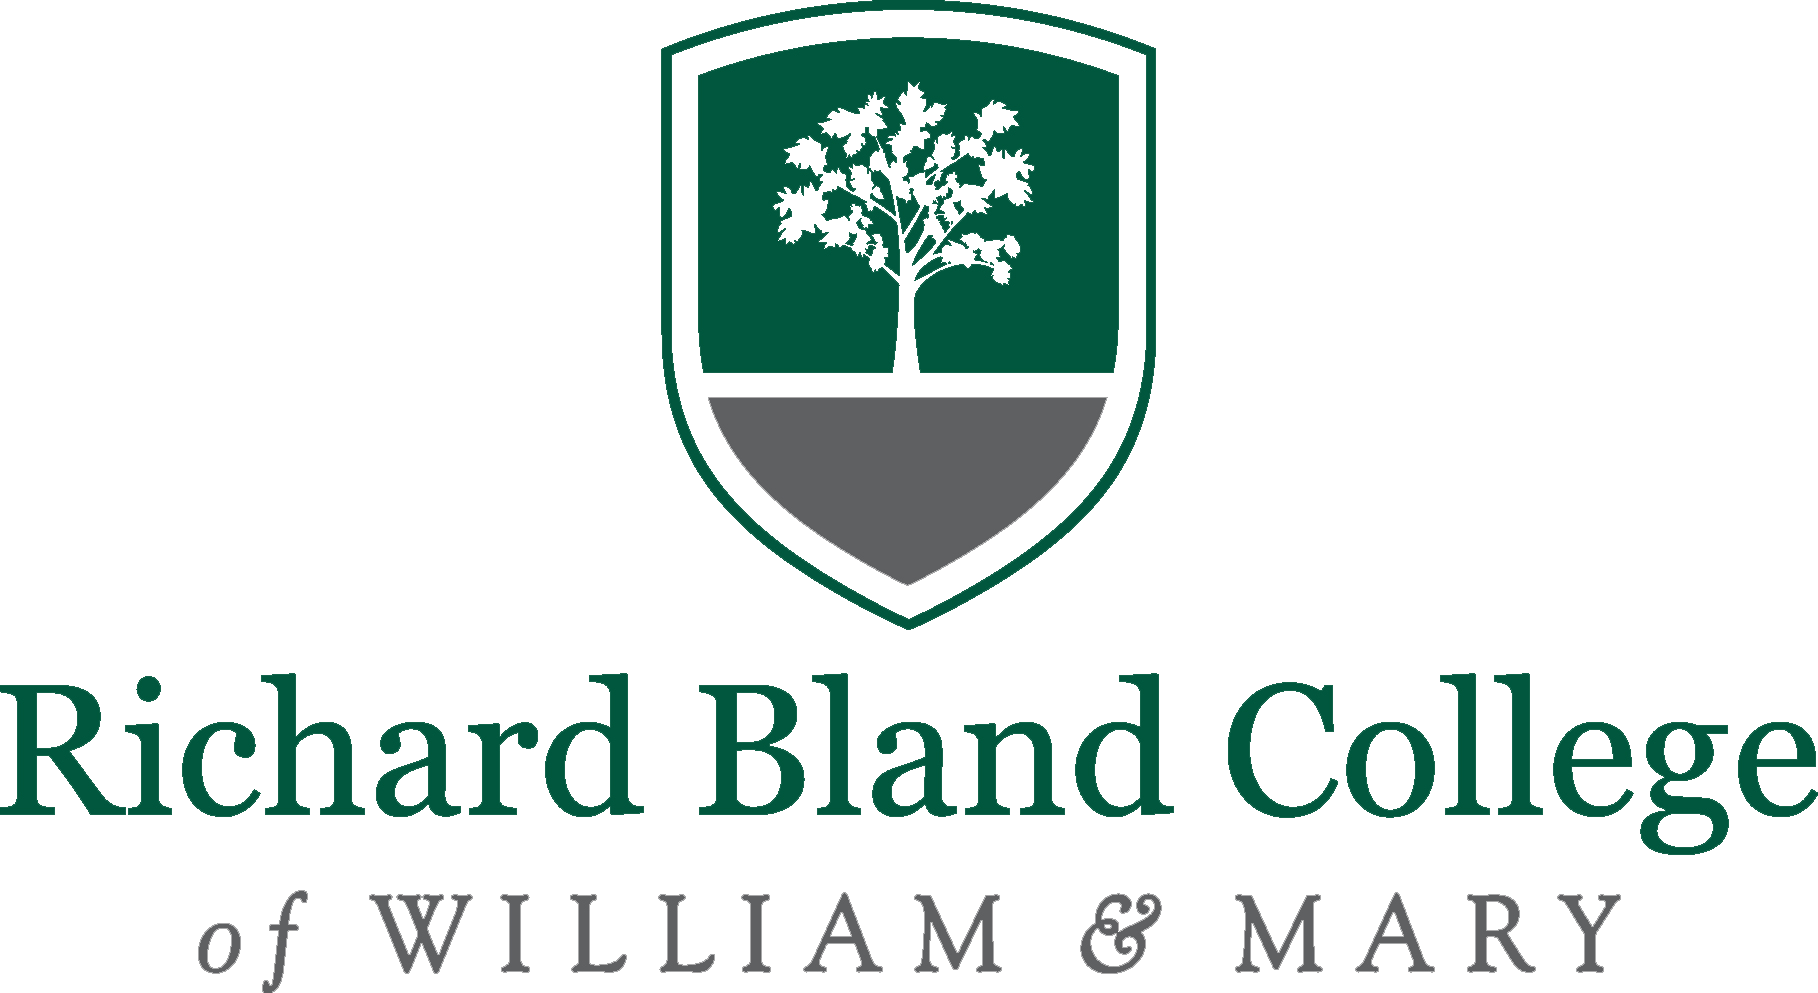 Richard Bland College of William & Mary (RBC)